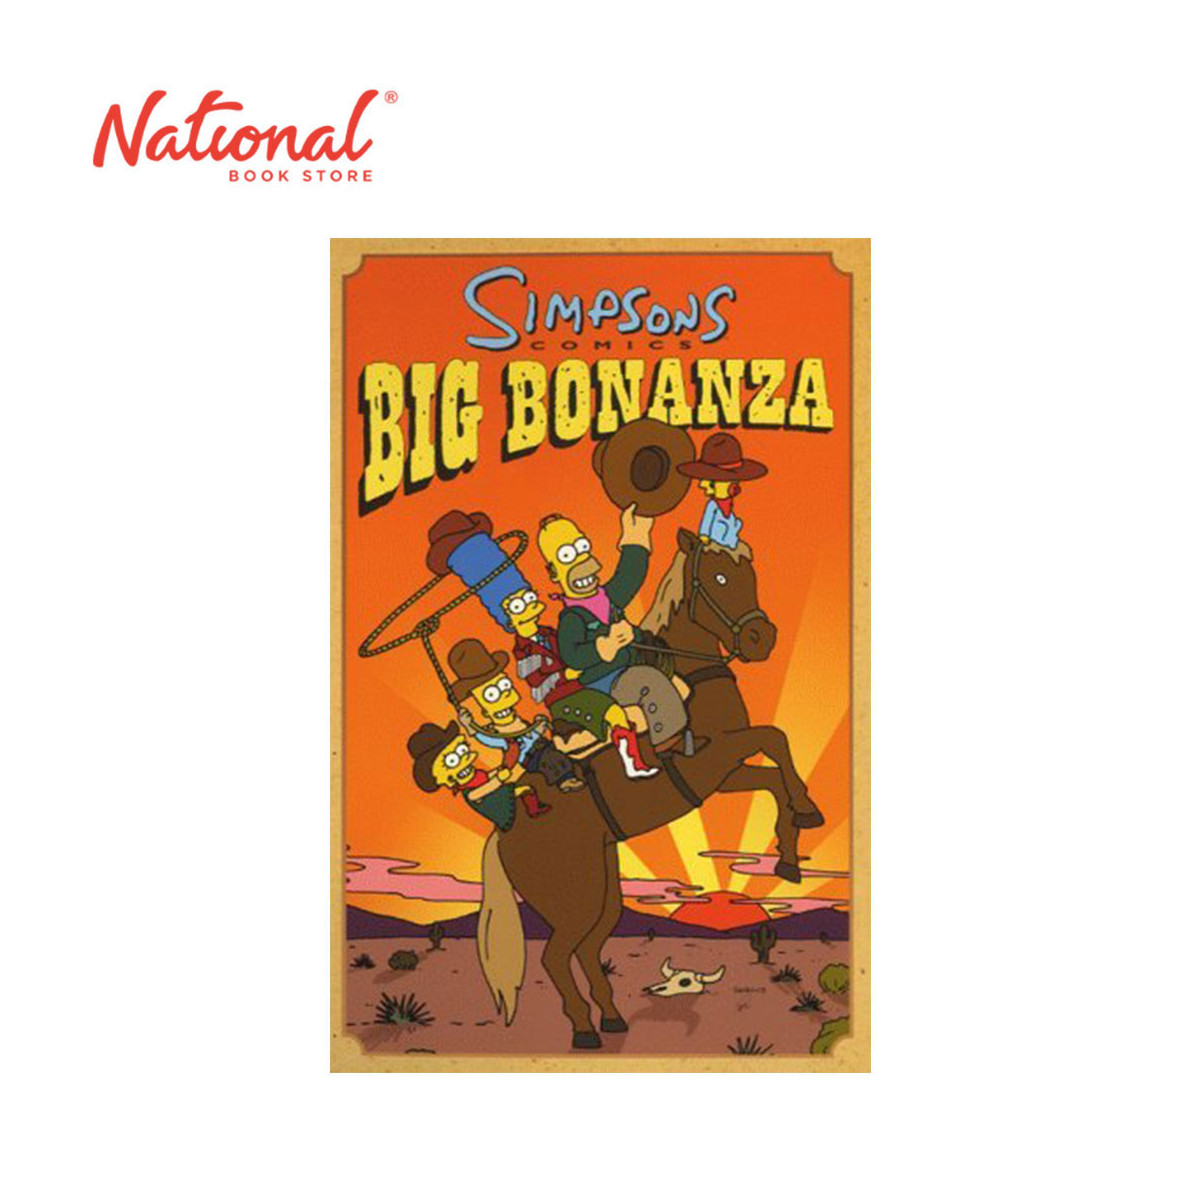 Simpsons Comics: Big Bonanza by Matt Groening - Trade Paperback - Graphic Novels